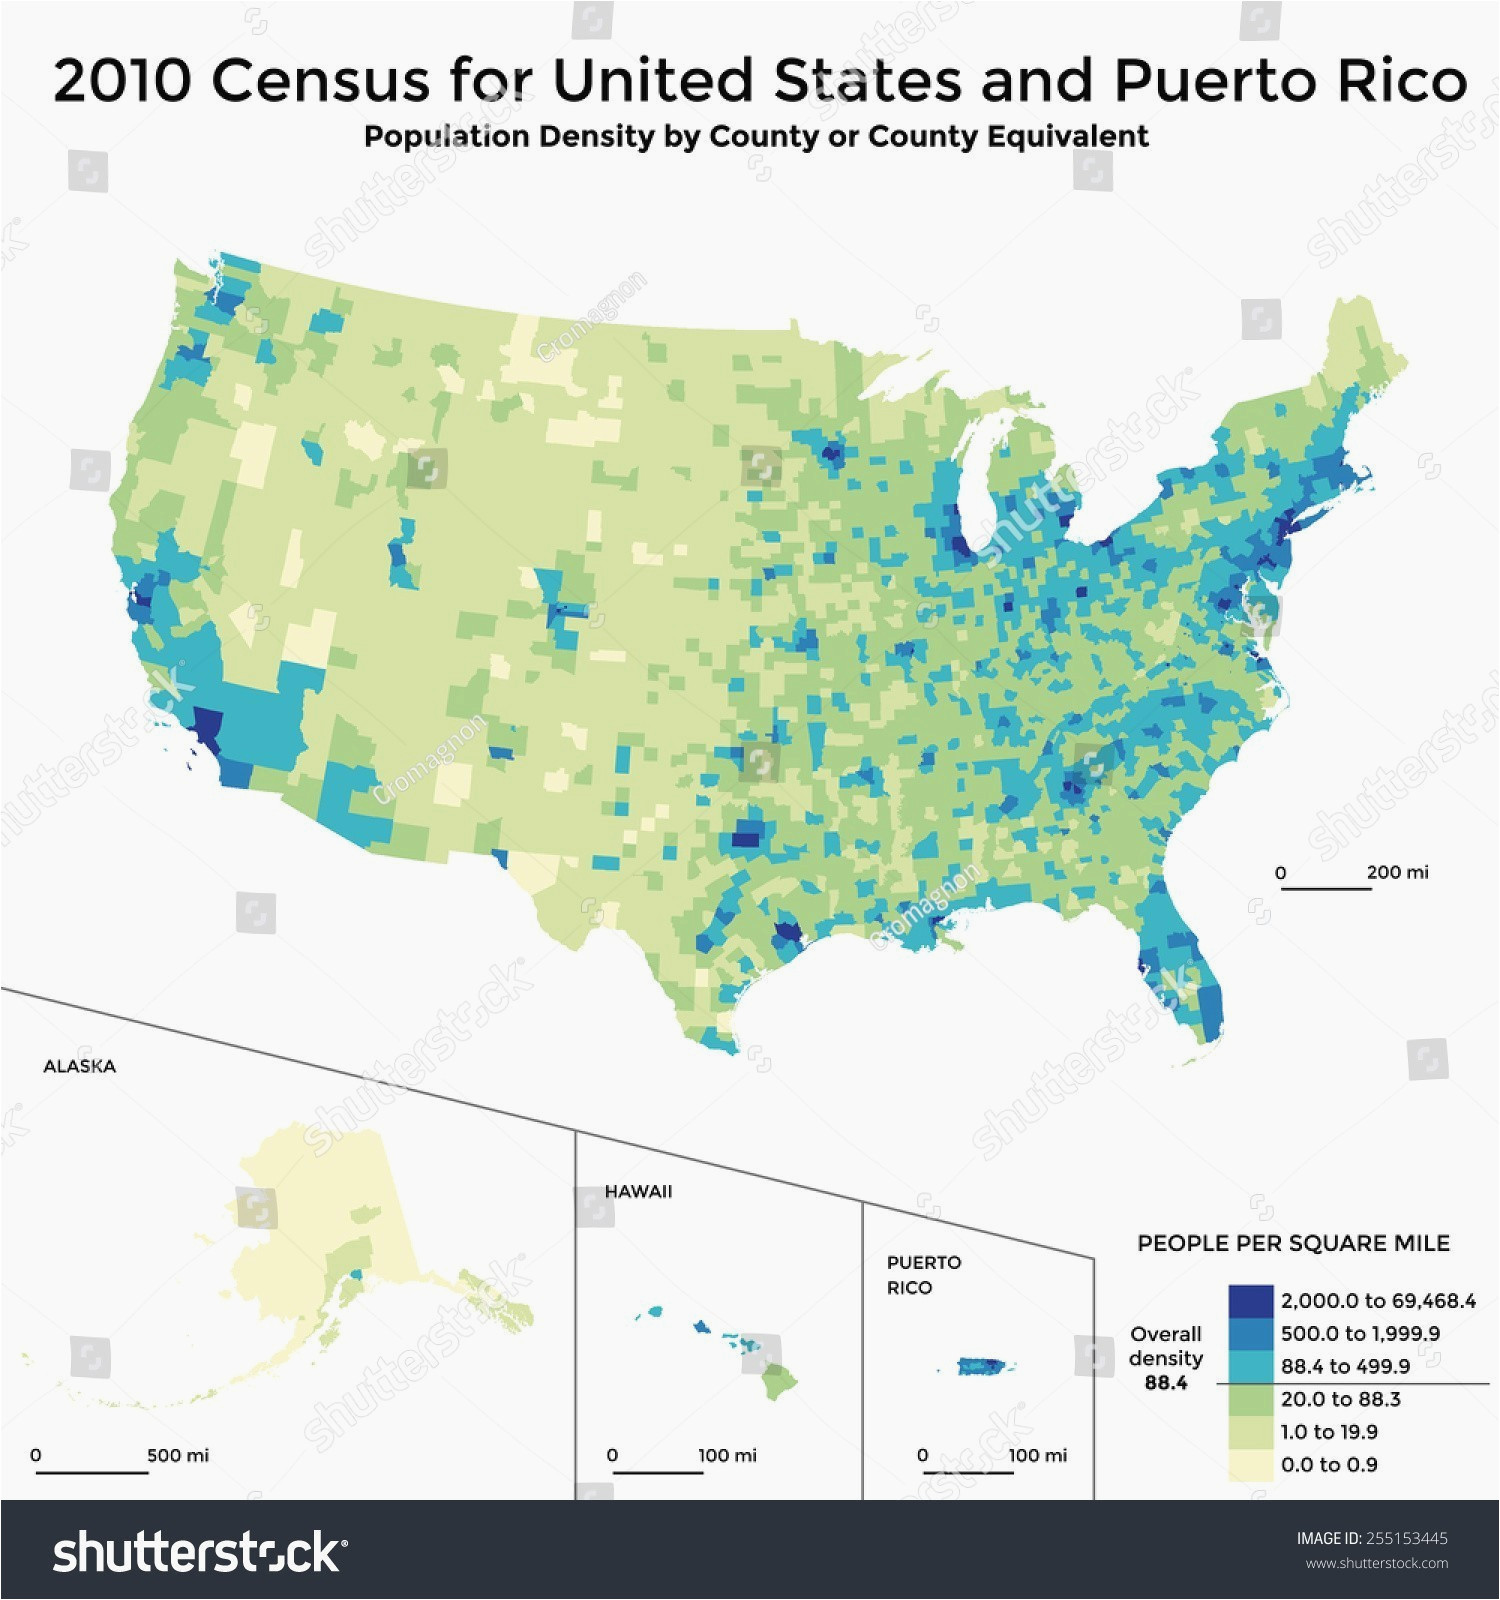 michigan population density map population density map united states